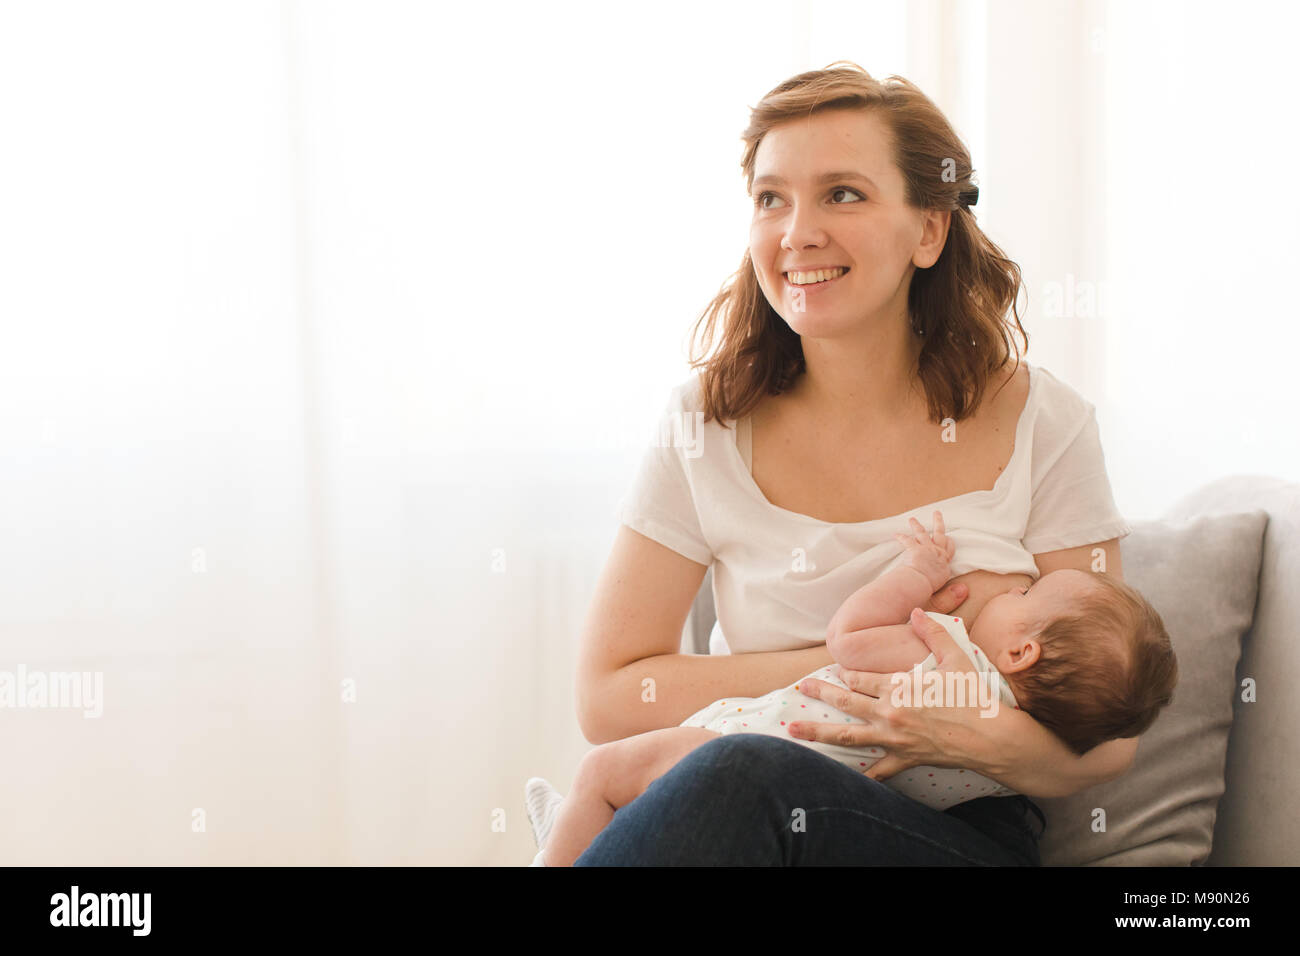 Cheerful woman breastfeeding child Stock Photo